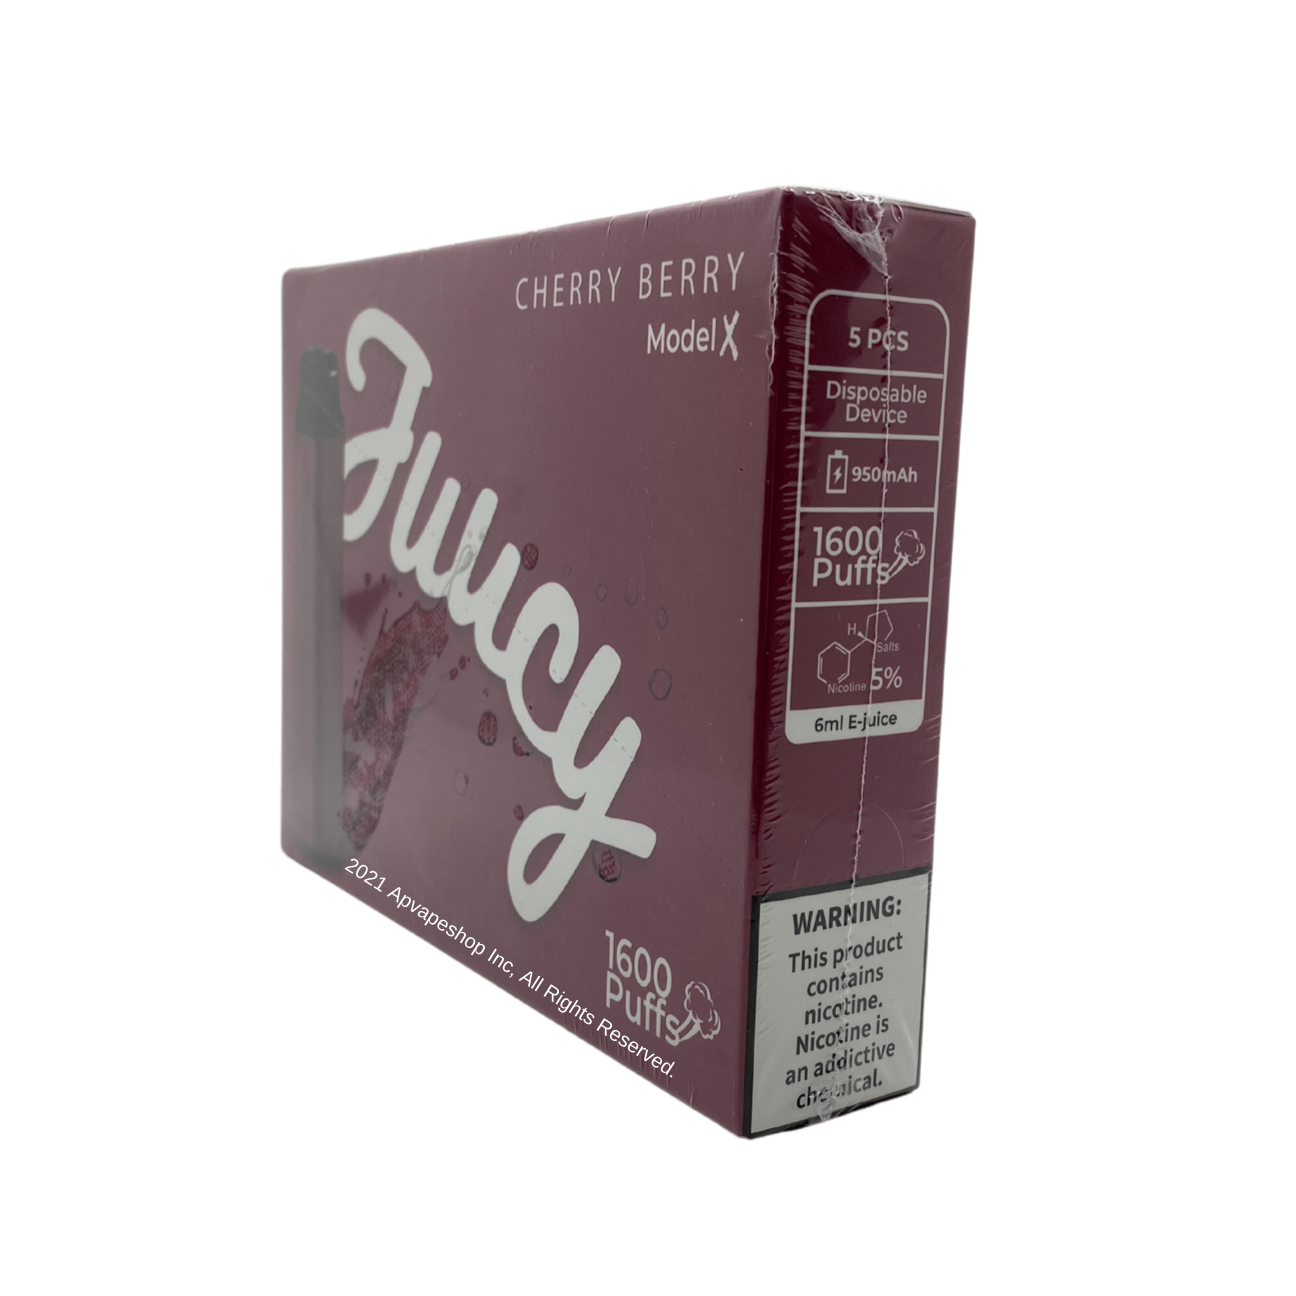 JUUCY Model X 1600 Puffs Disposable Vape Cherry Berry